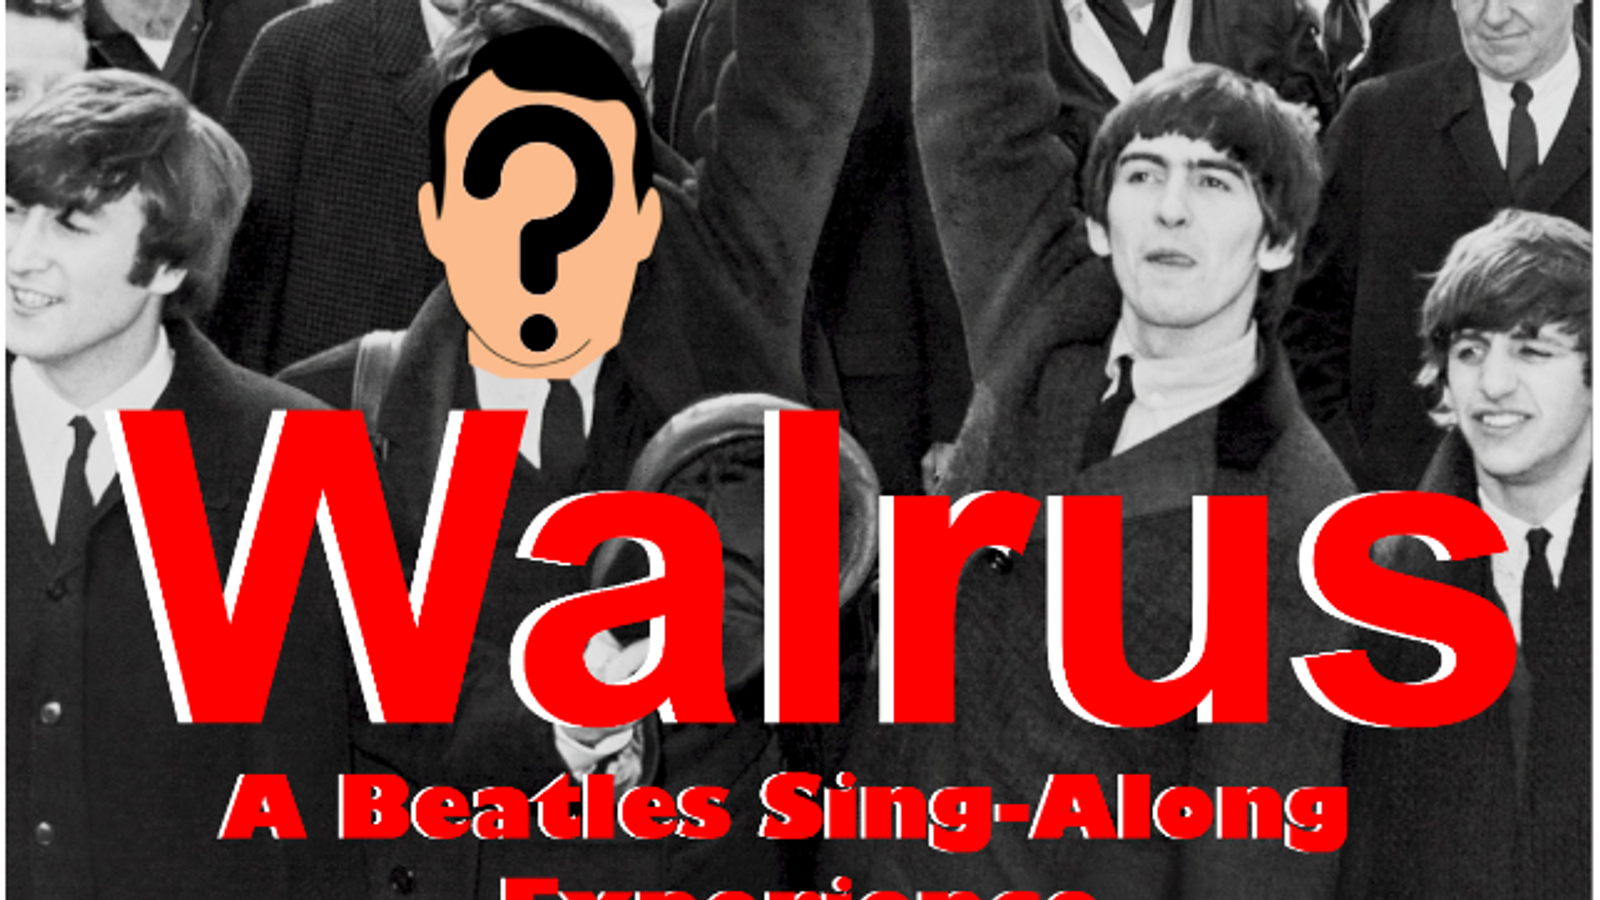 Walrus: A Beatles Sing Along